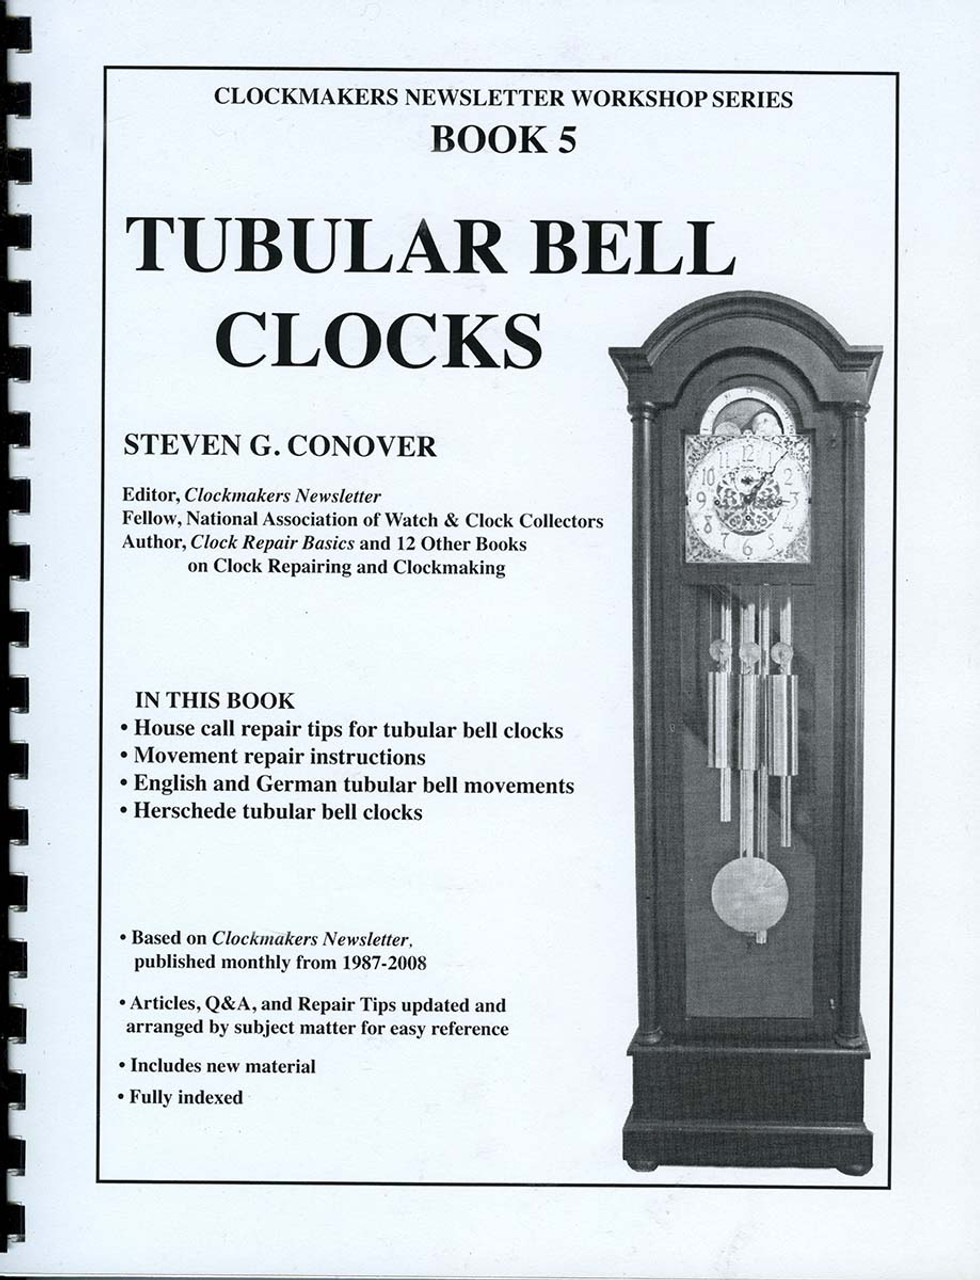 TUBULAR BELL CLOCKS BOOK 5 CONOVER